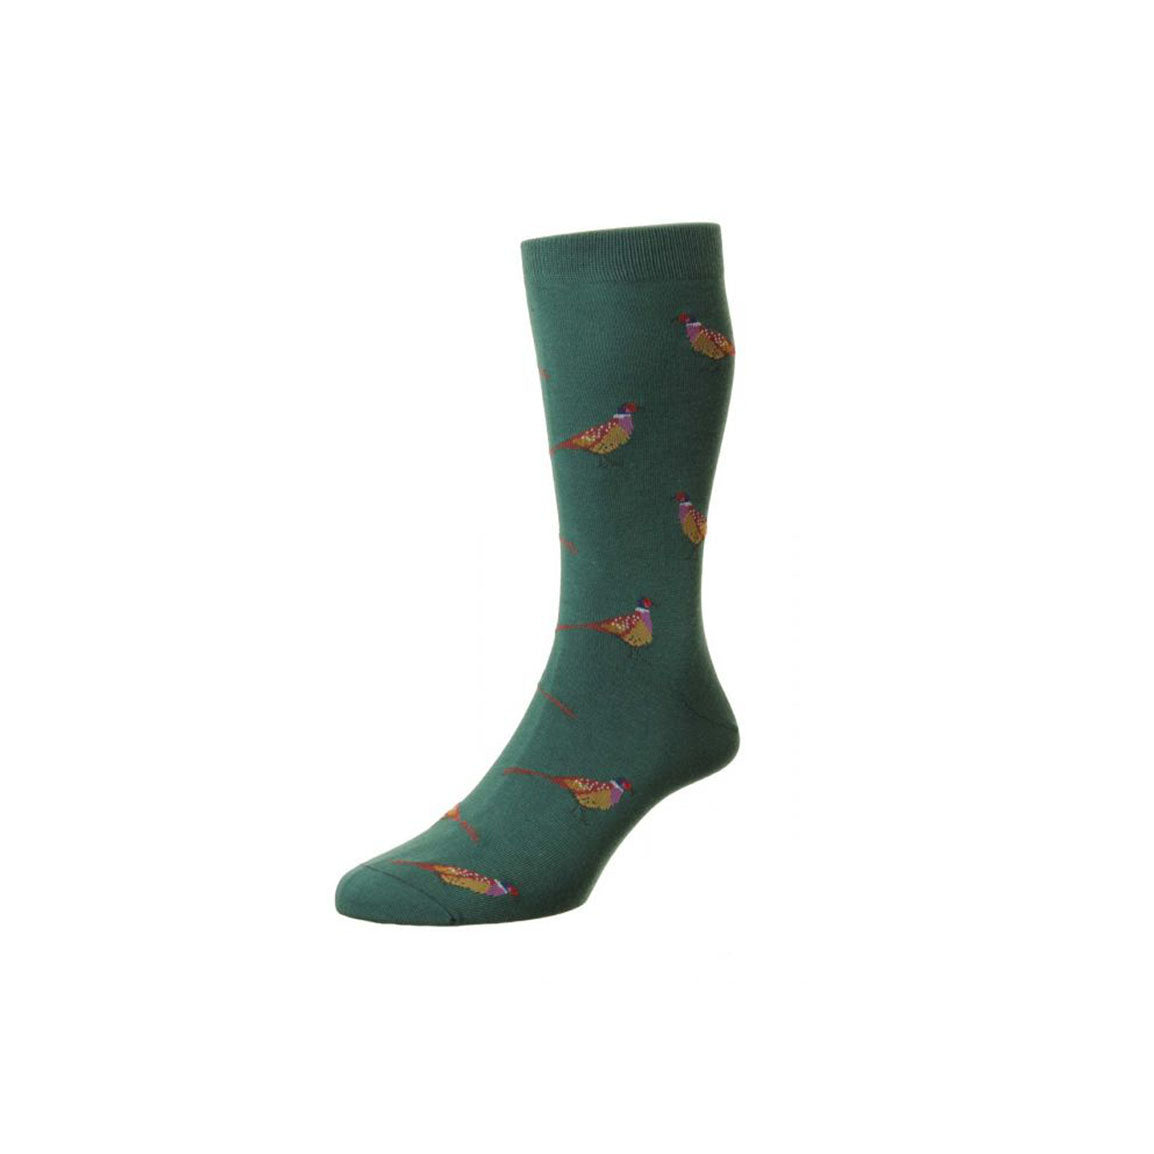 Scott-Nichol Firle Pheasant Socks - Green